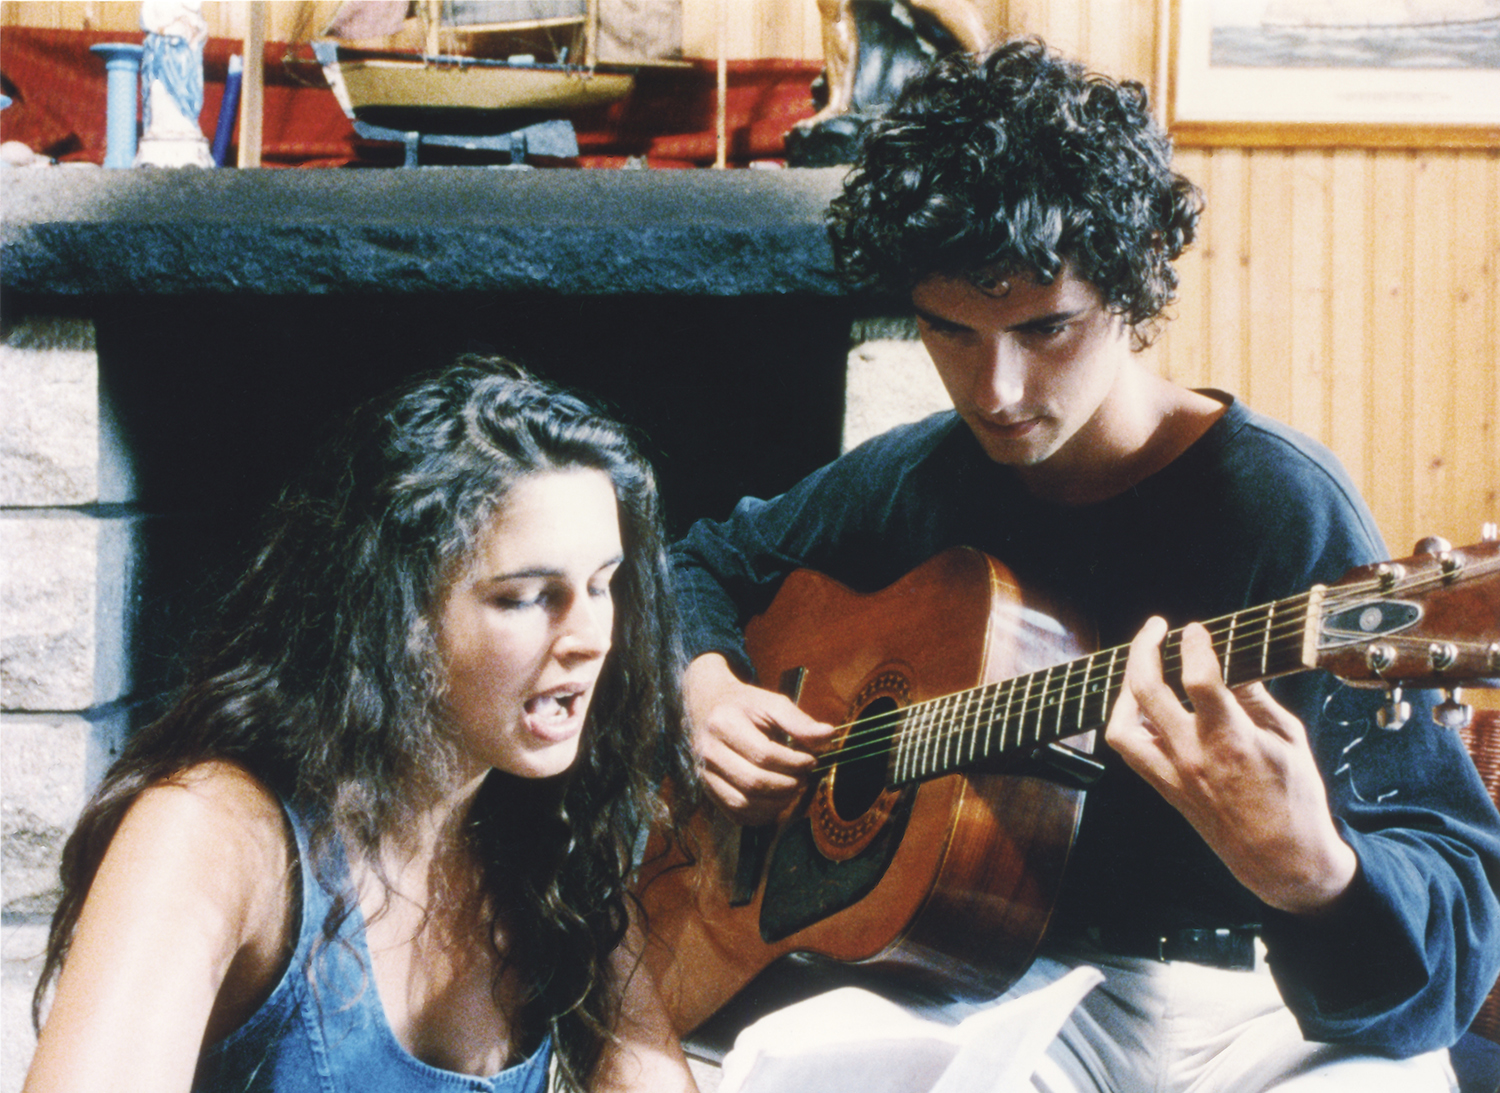 Still of Melvil Poupaud and Gwenaëlle Simon in Conte d'été (1996)